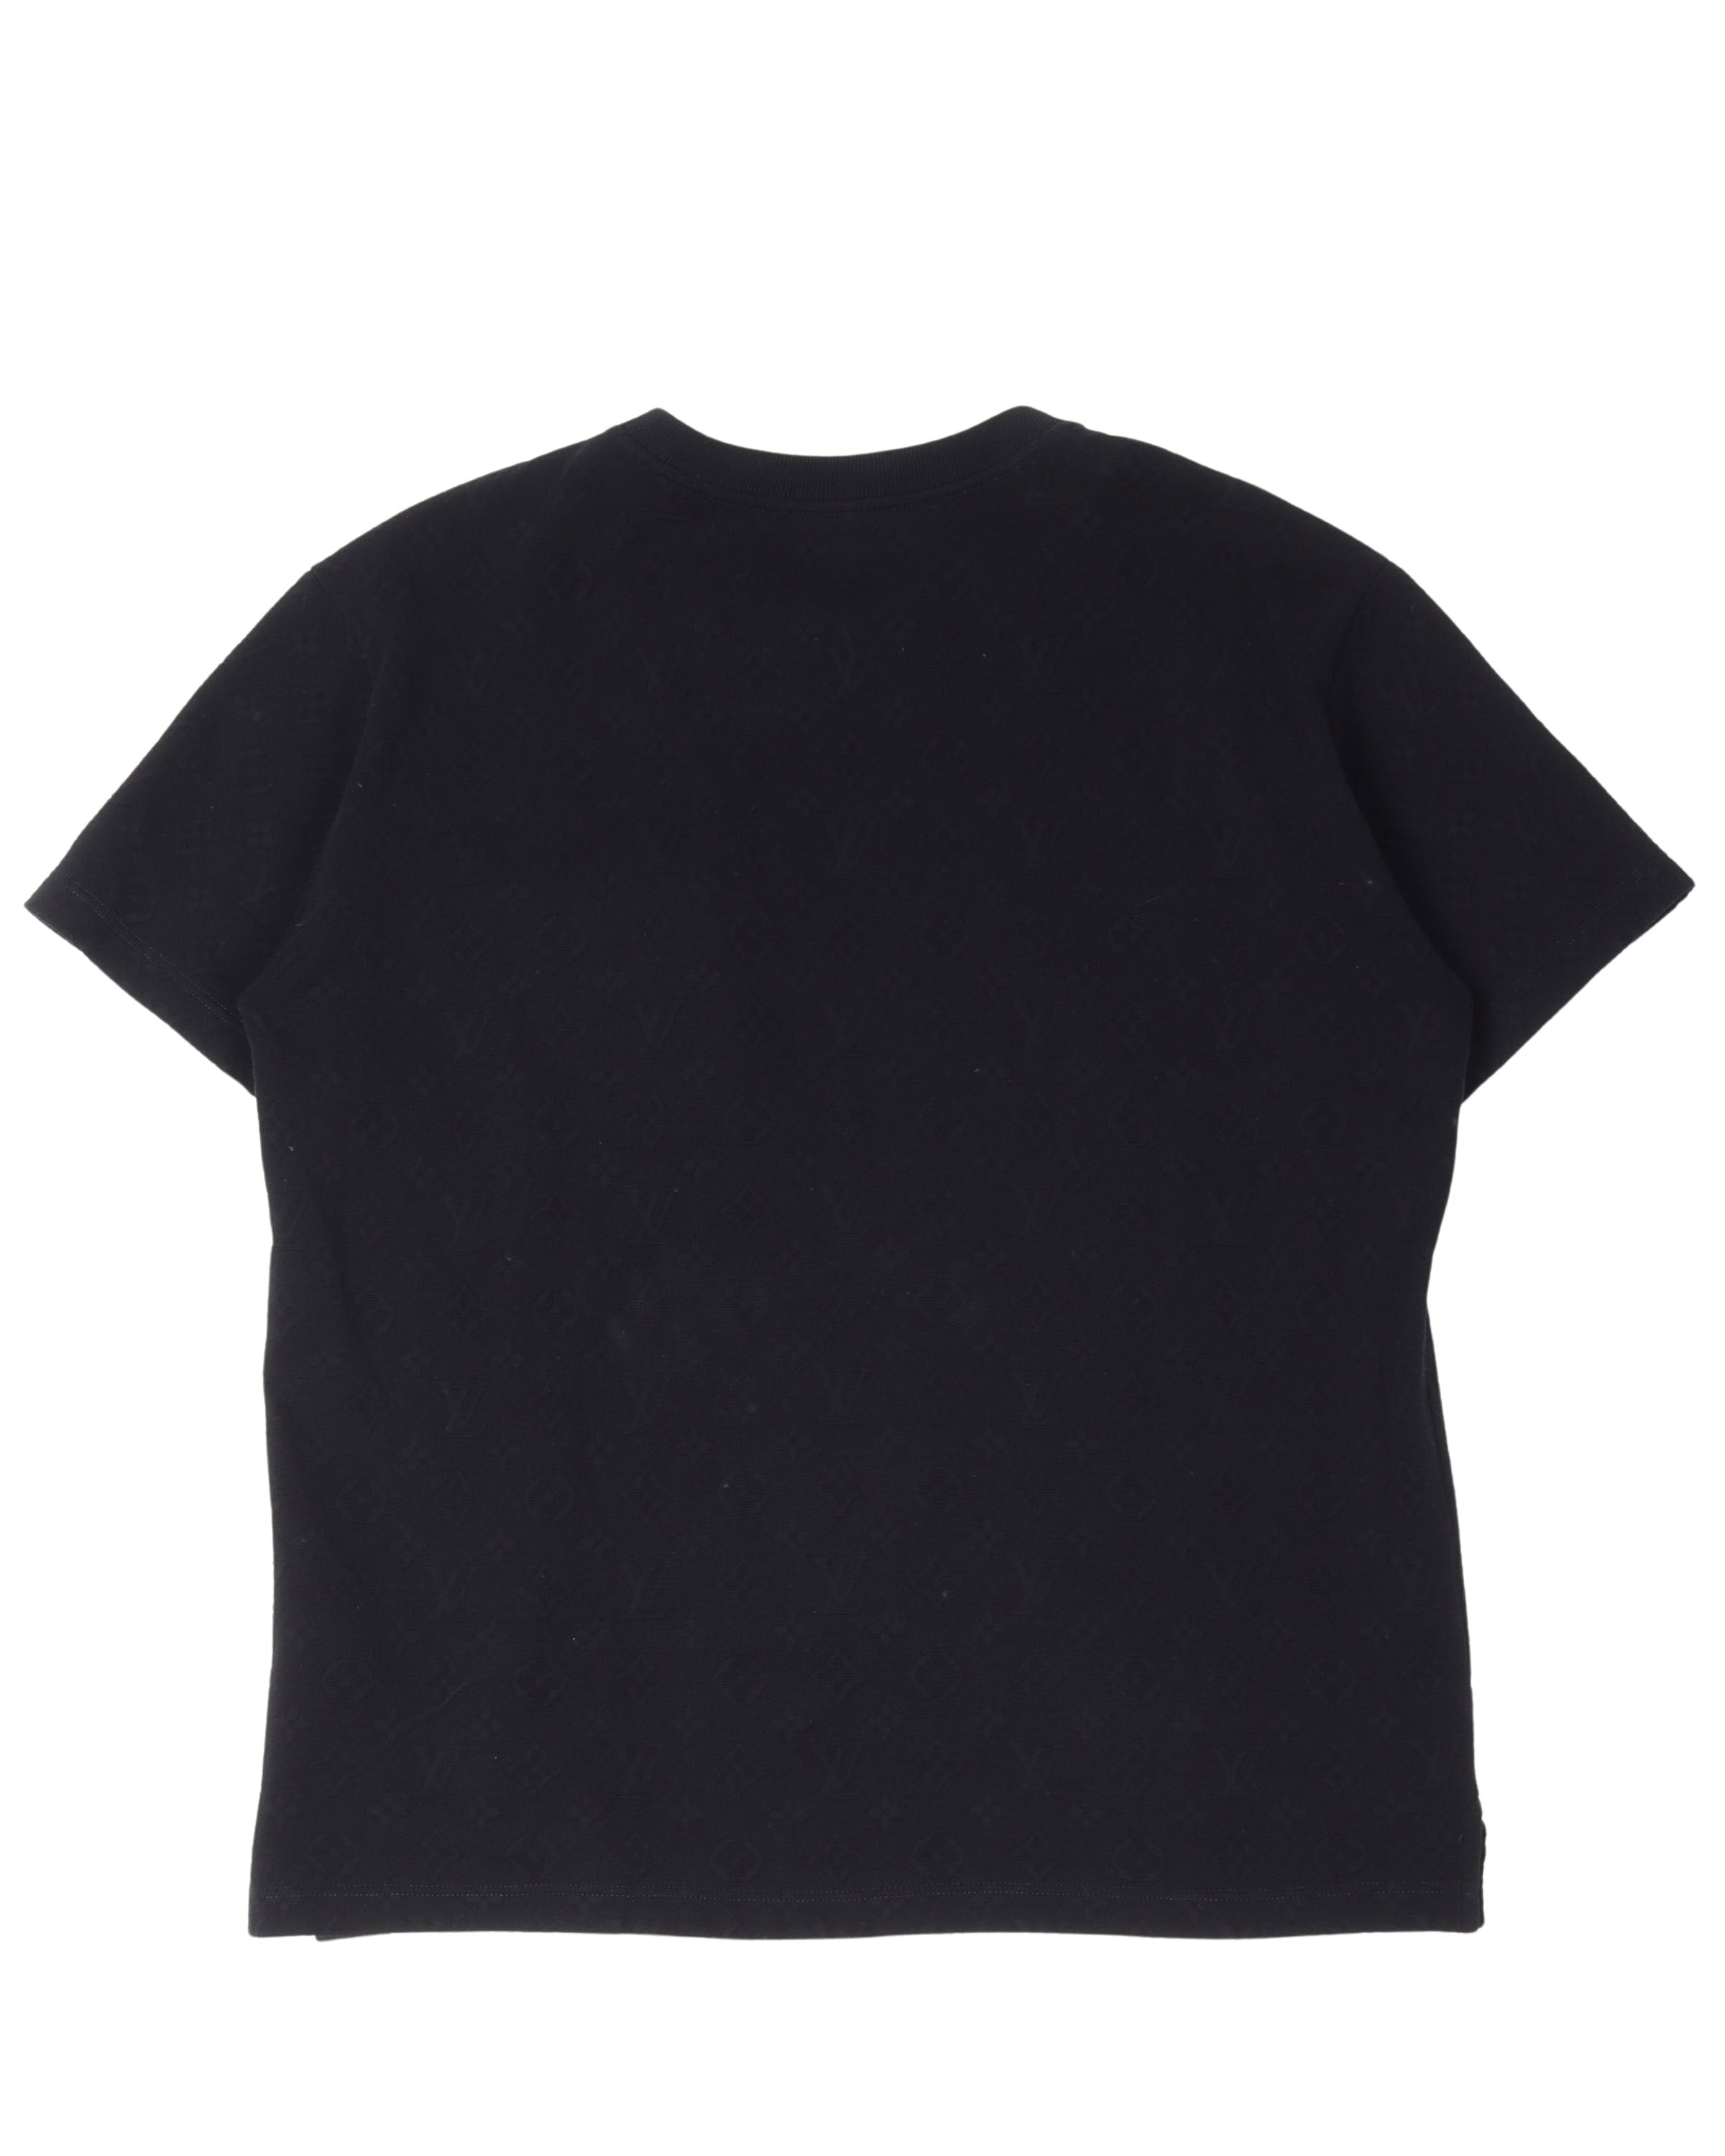 Louis Vuitton Monogram Pocket Knit T-Shirt Dress Night Blue. Size S0